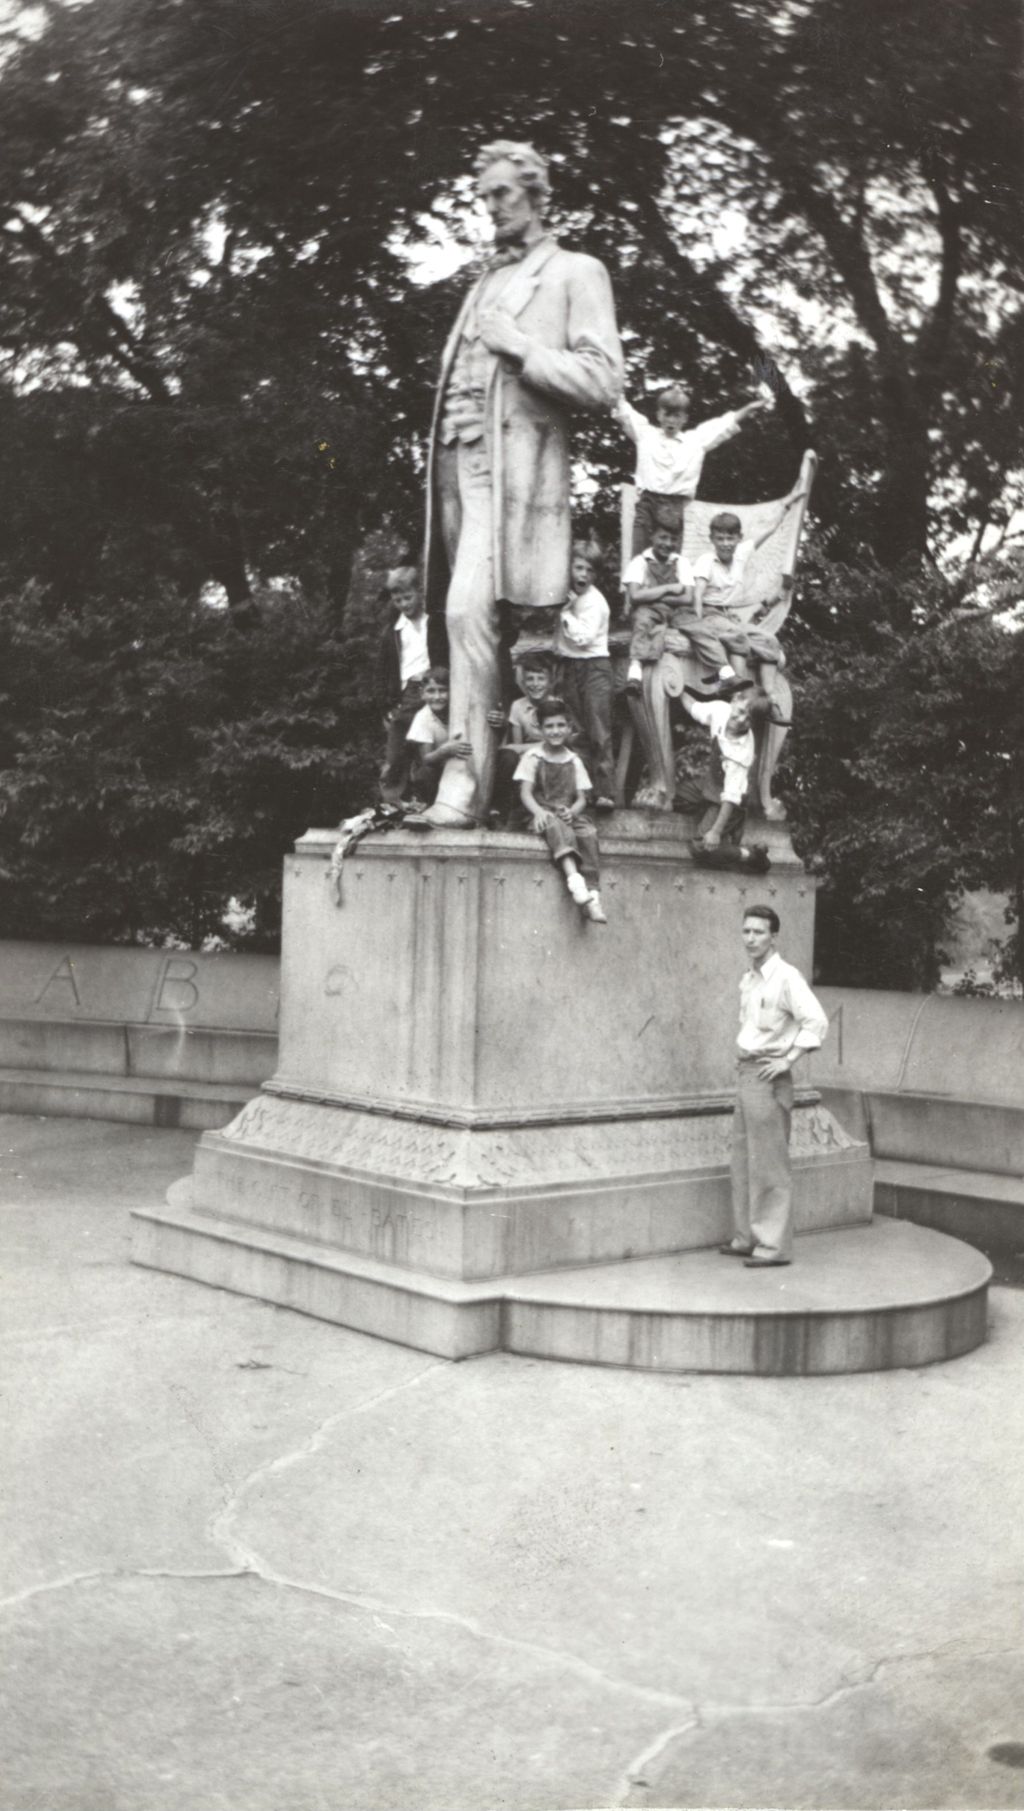 Boys climbing statue of Abraham Lincoln